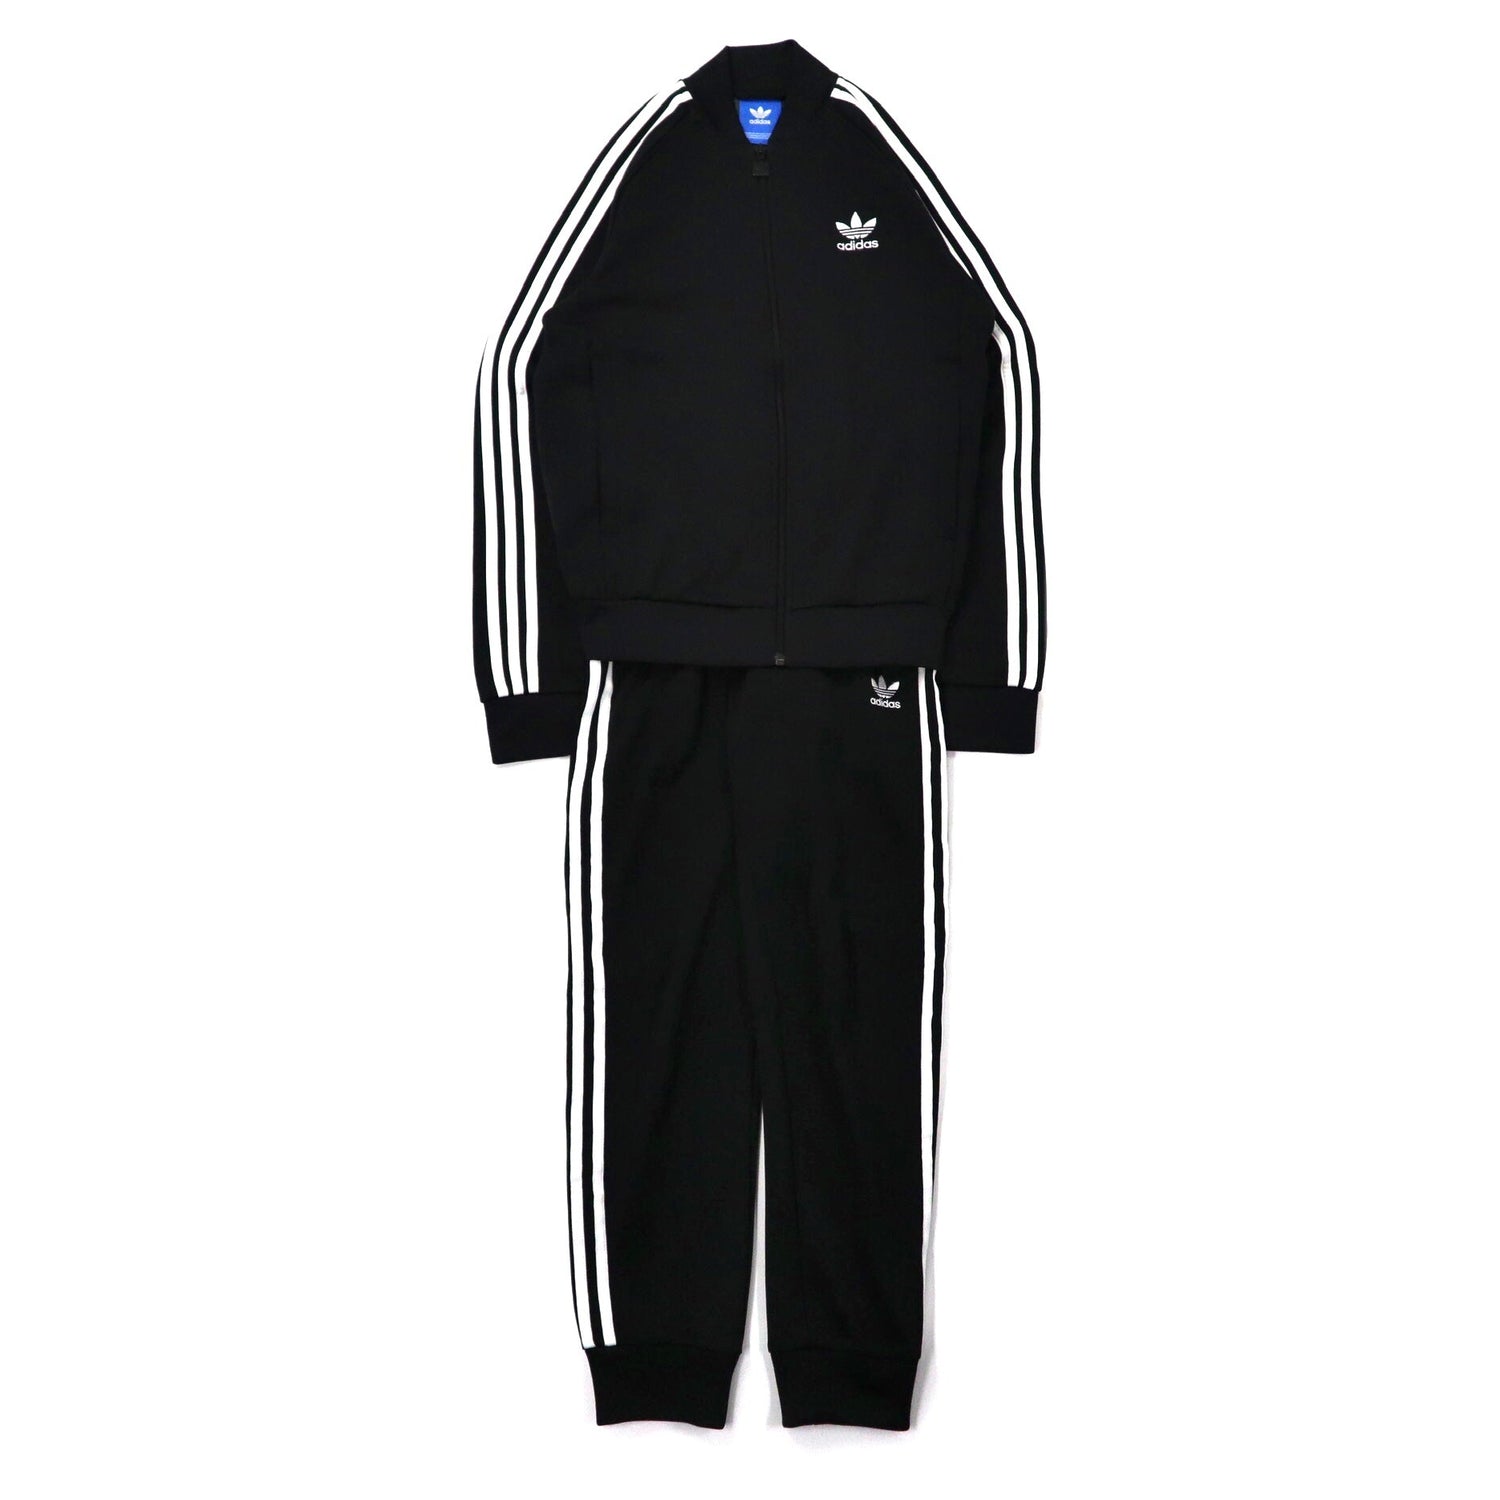 Adidas Originals Track Jacket Setup Jersey S Black 3 Striped